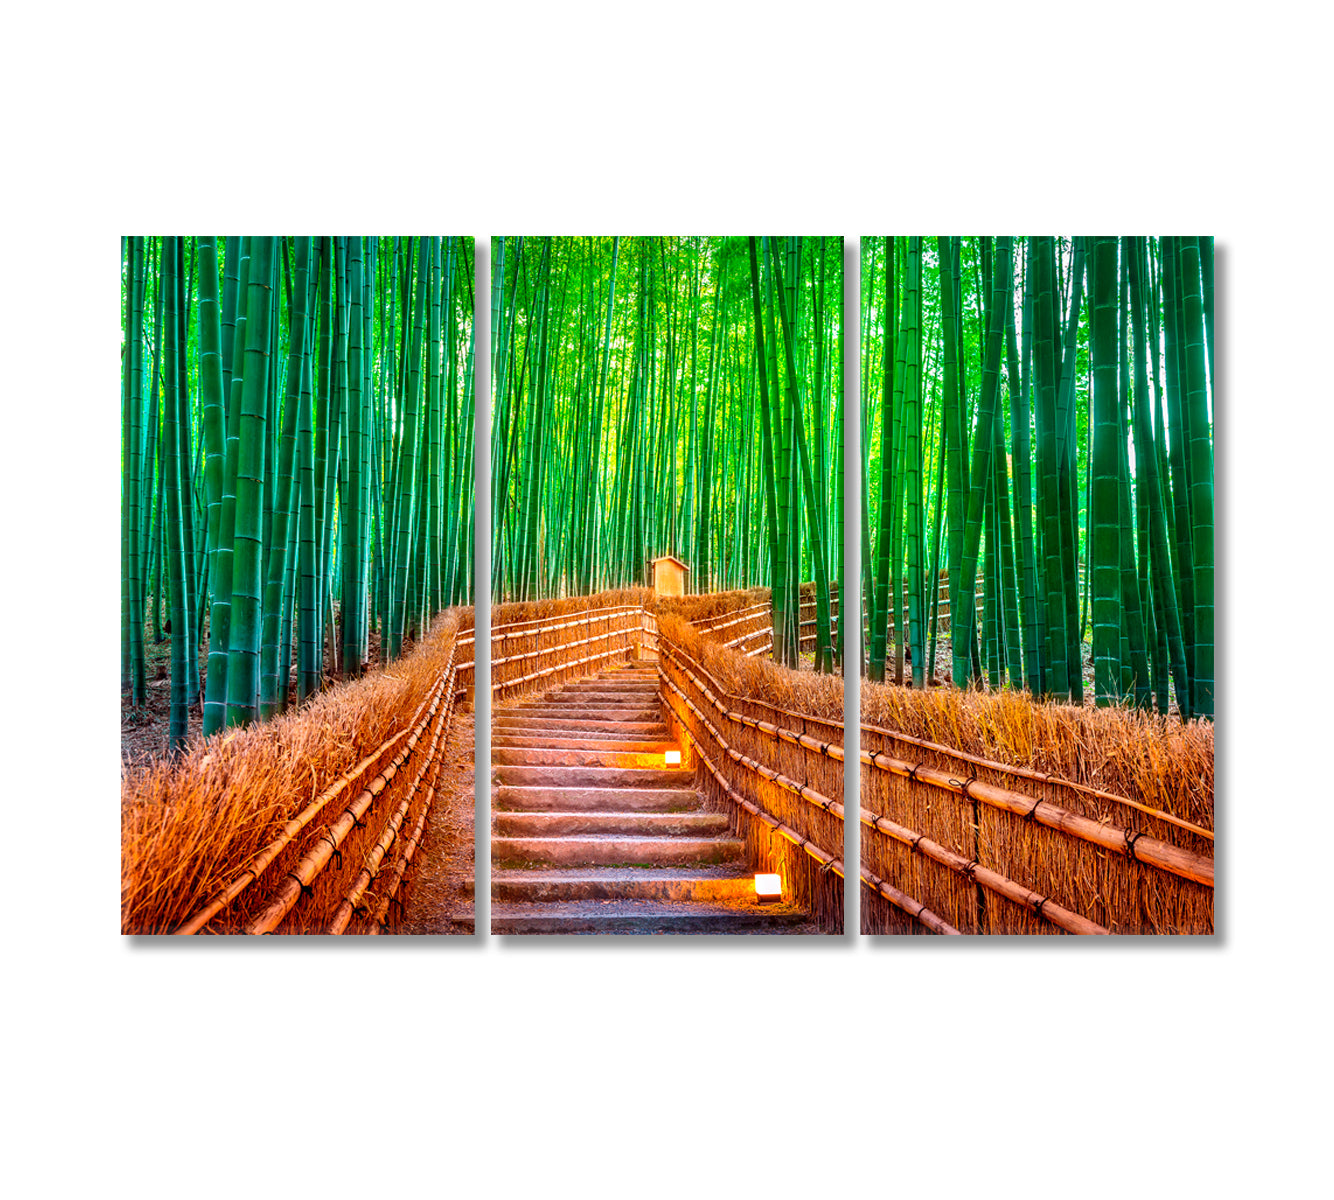 Bamboo Forest Kyoto Japan Canvas Print-Canvas Print-CetArt-3 Panels-36x24 inches-CetArt